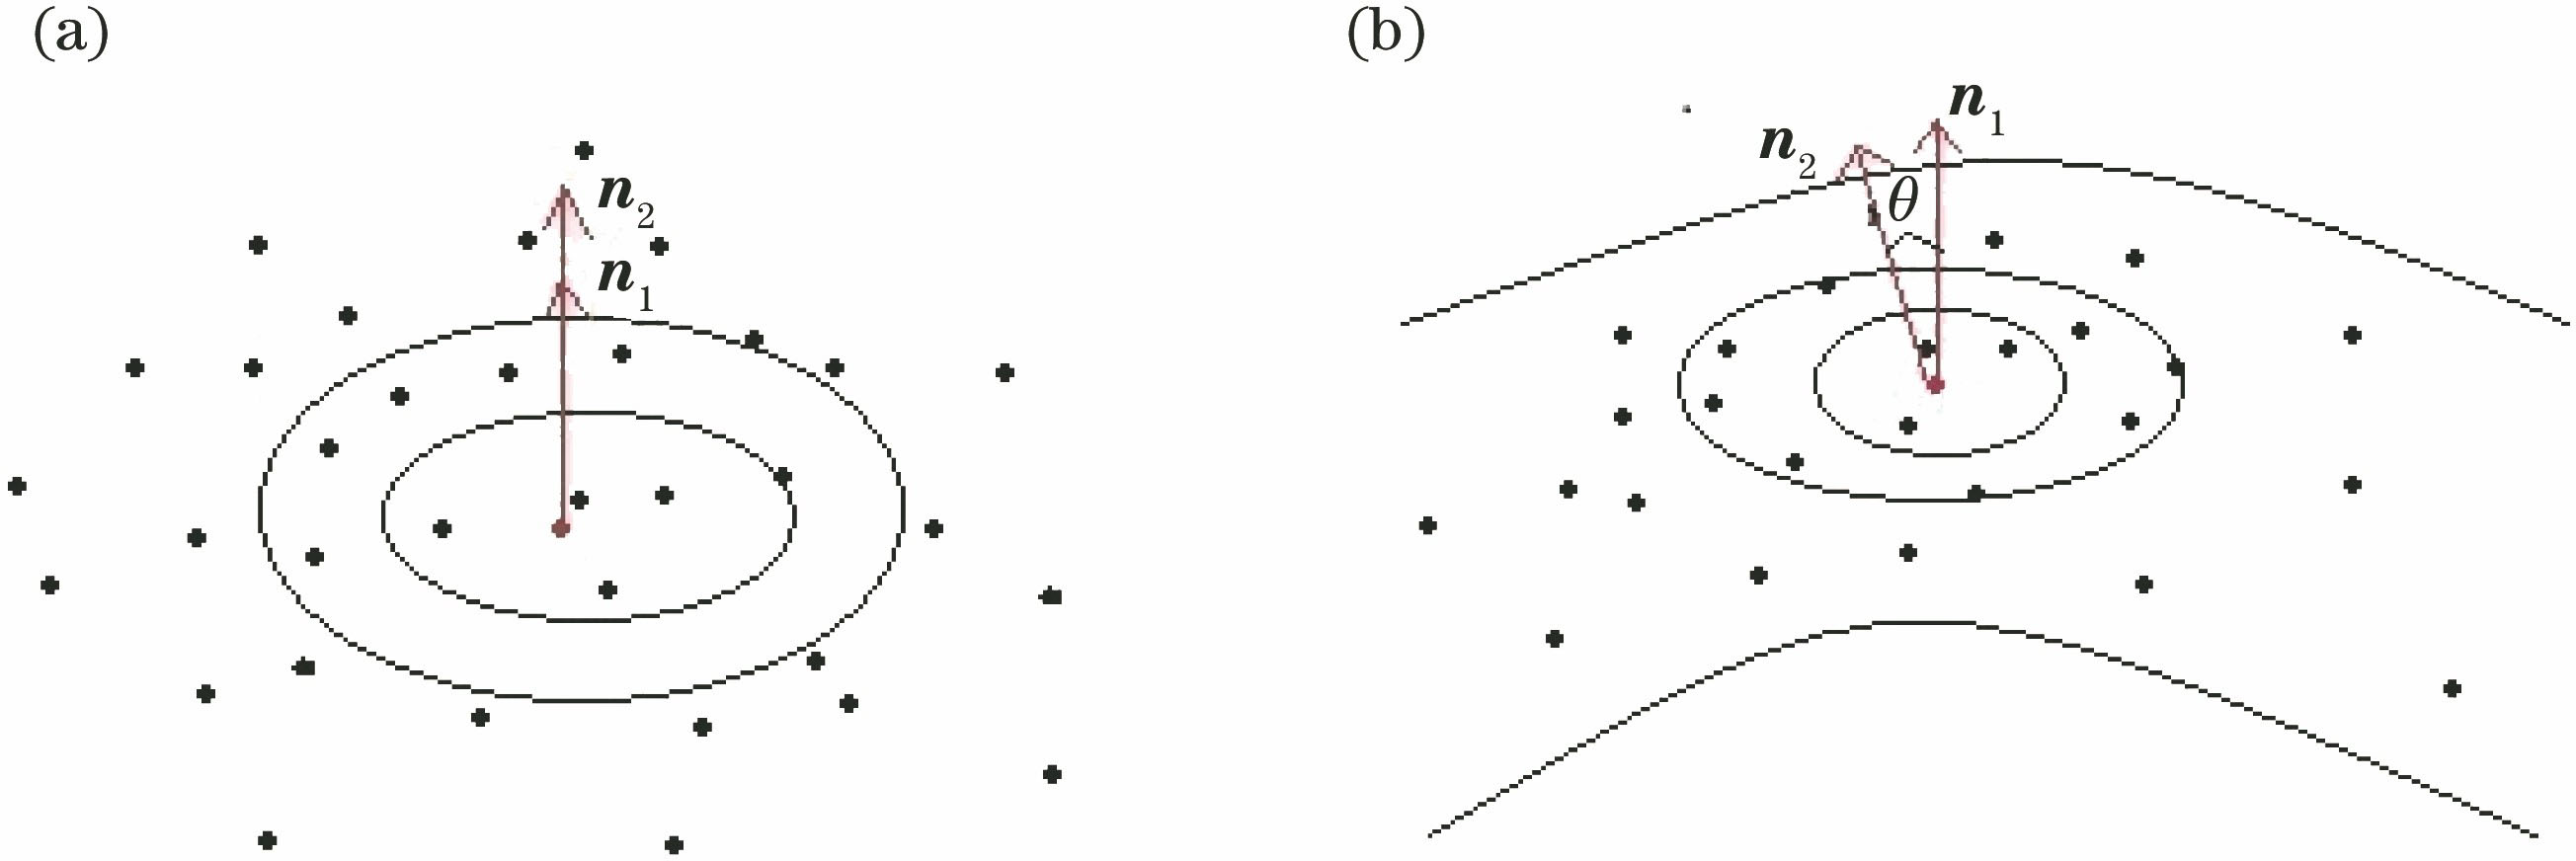 Normal vectors in different regions. (a) Flat region; (b) undulating region